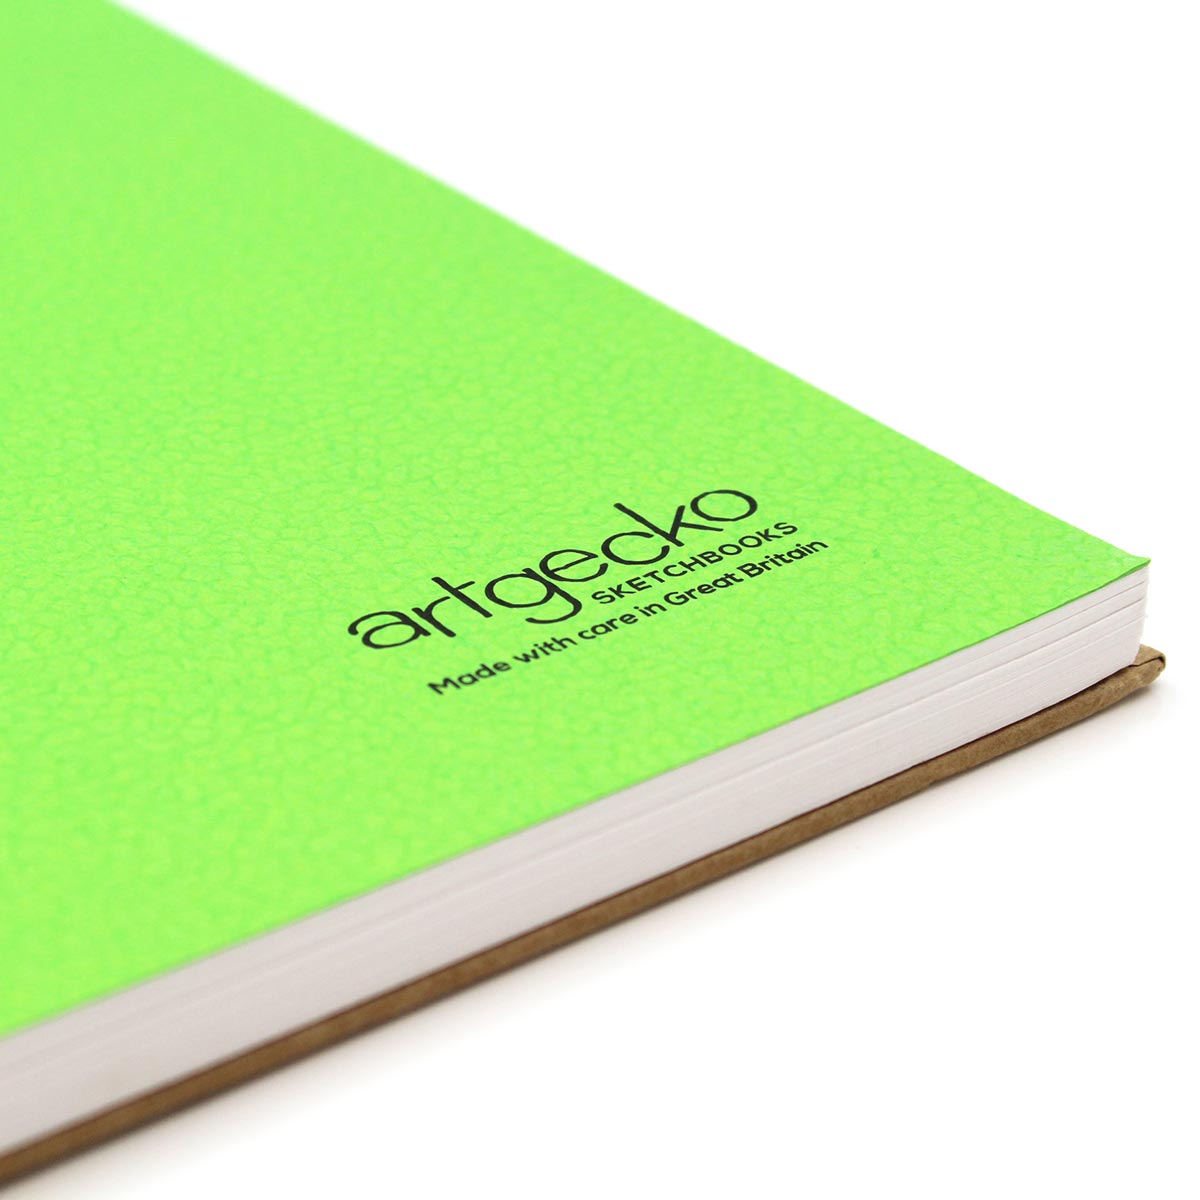 Artgecko - Krafty Sketchbook Mixed Media - A3 Landschap